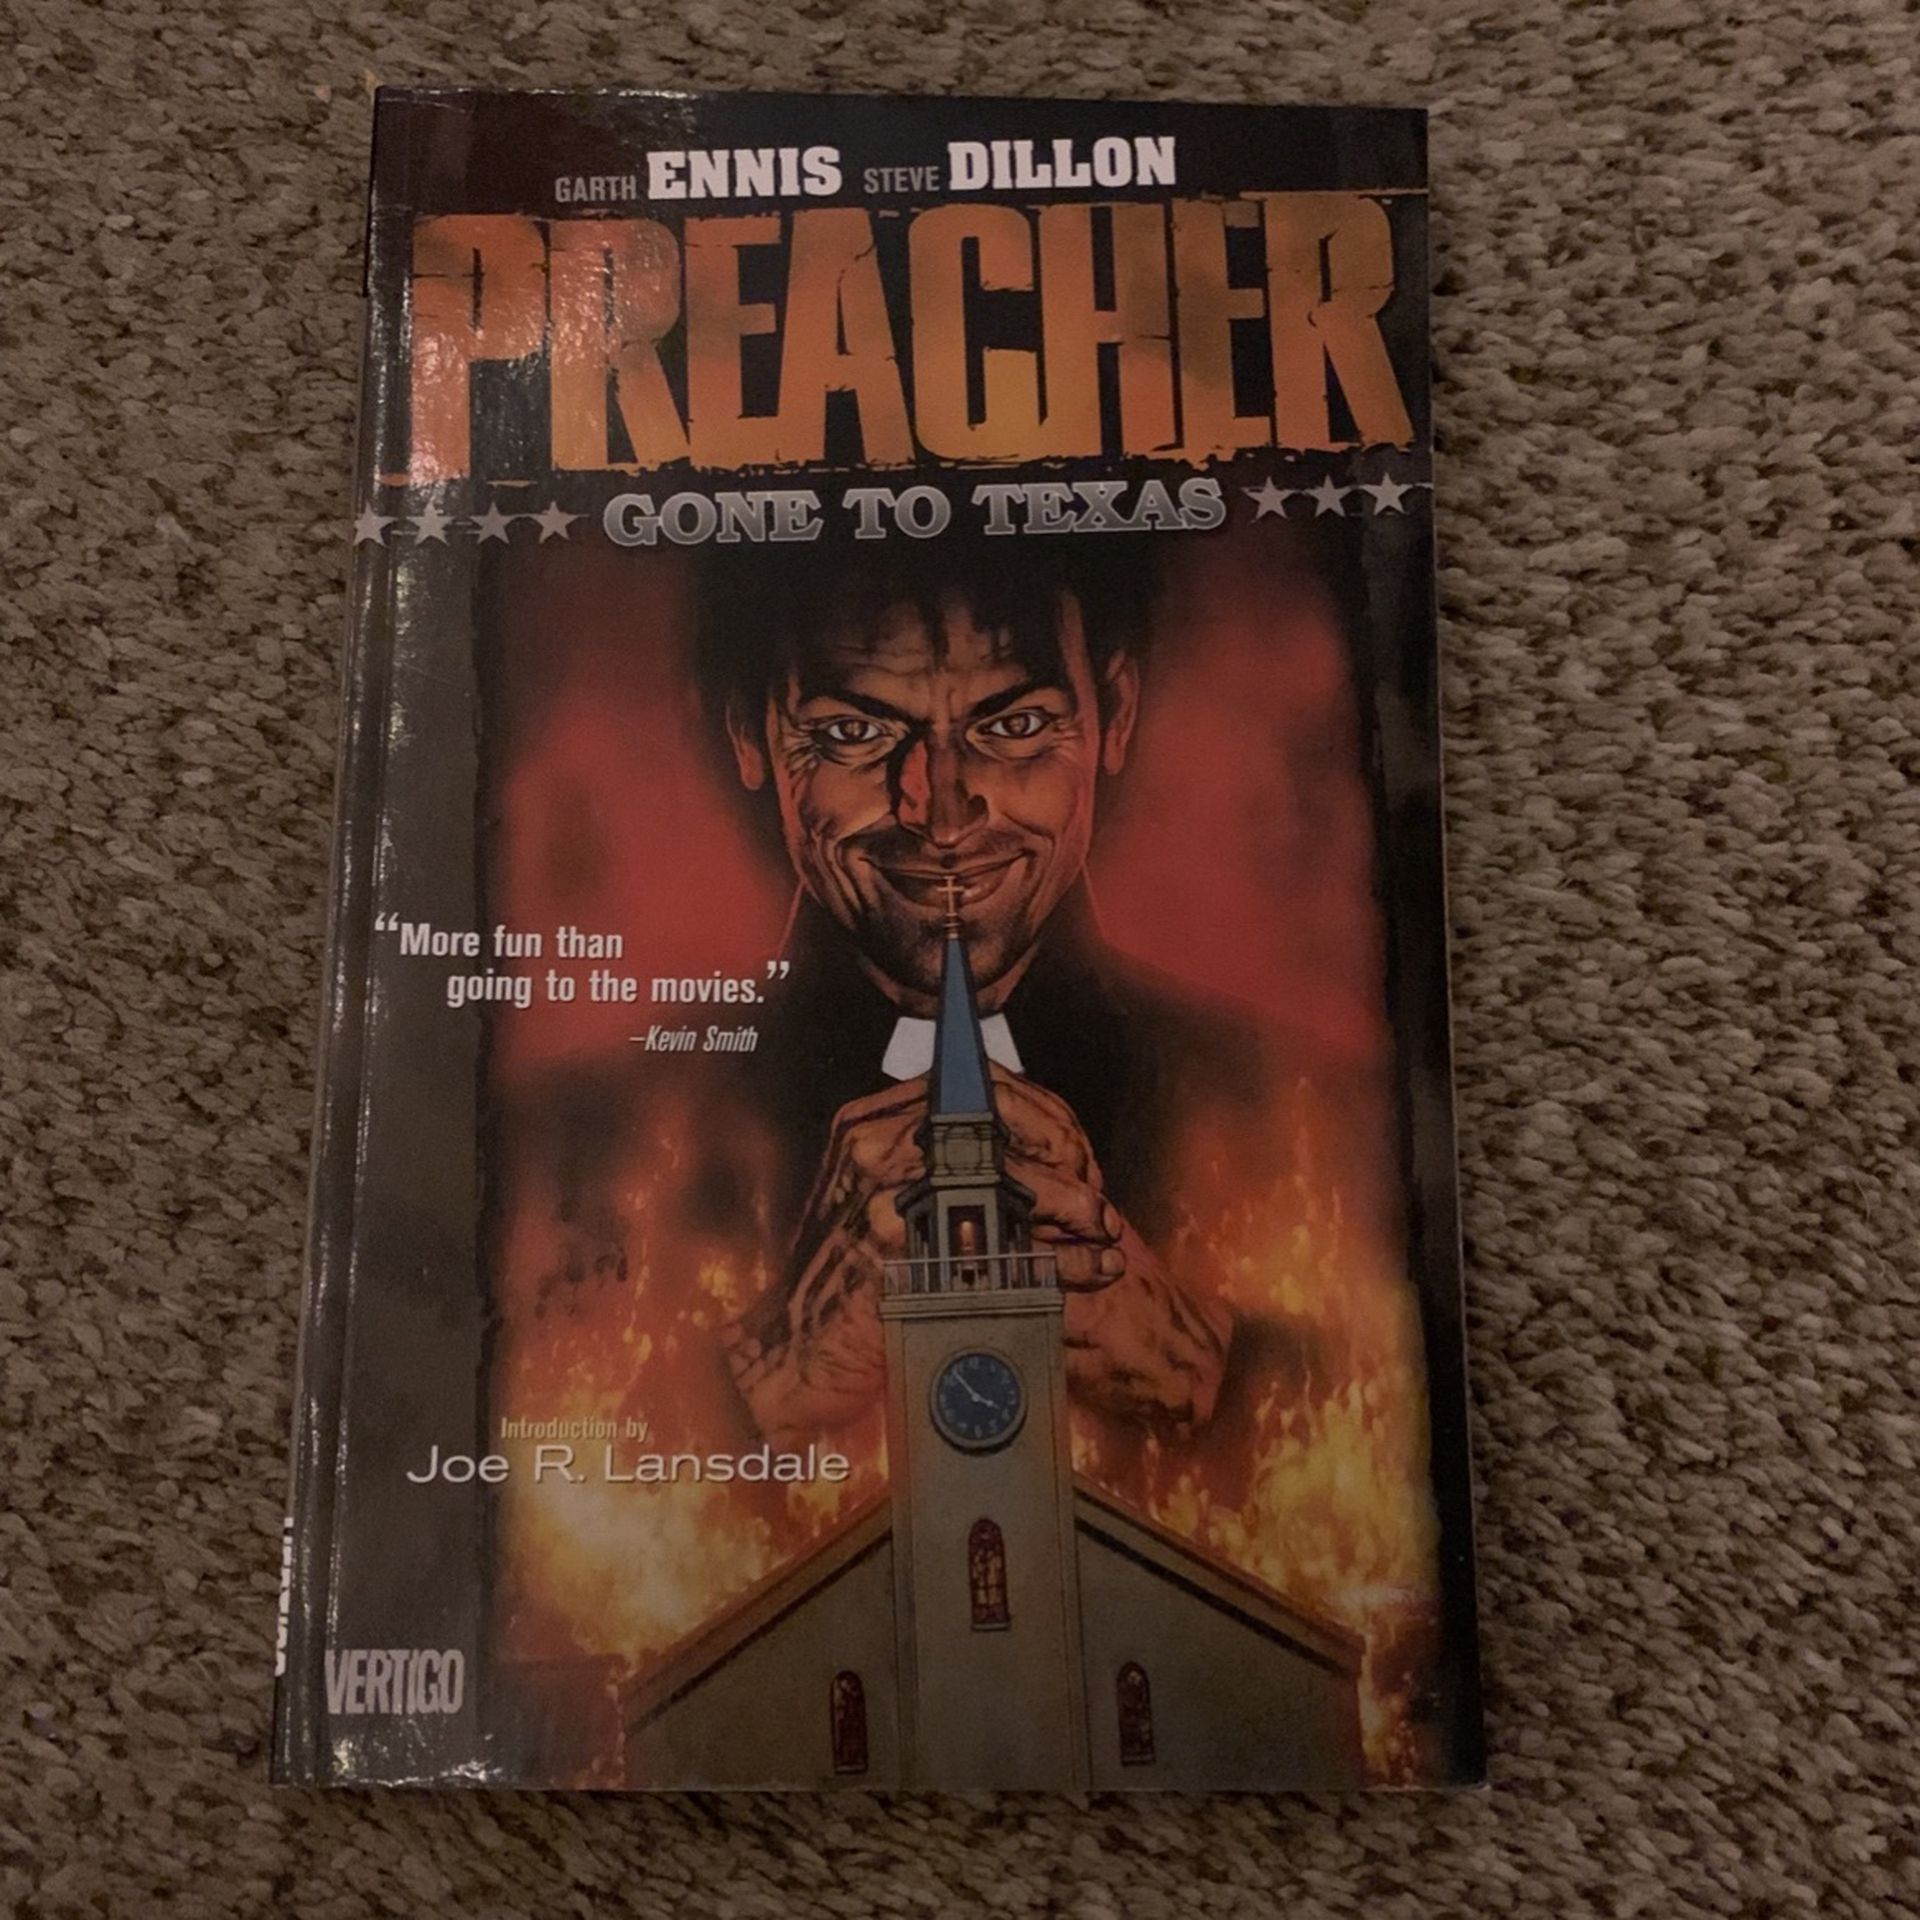 Preacher Volume 1